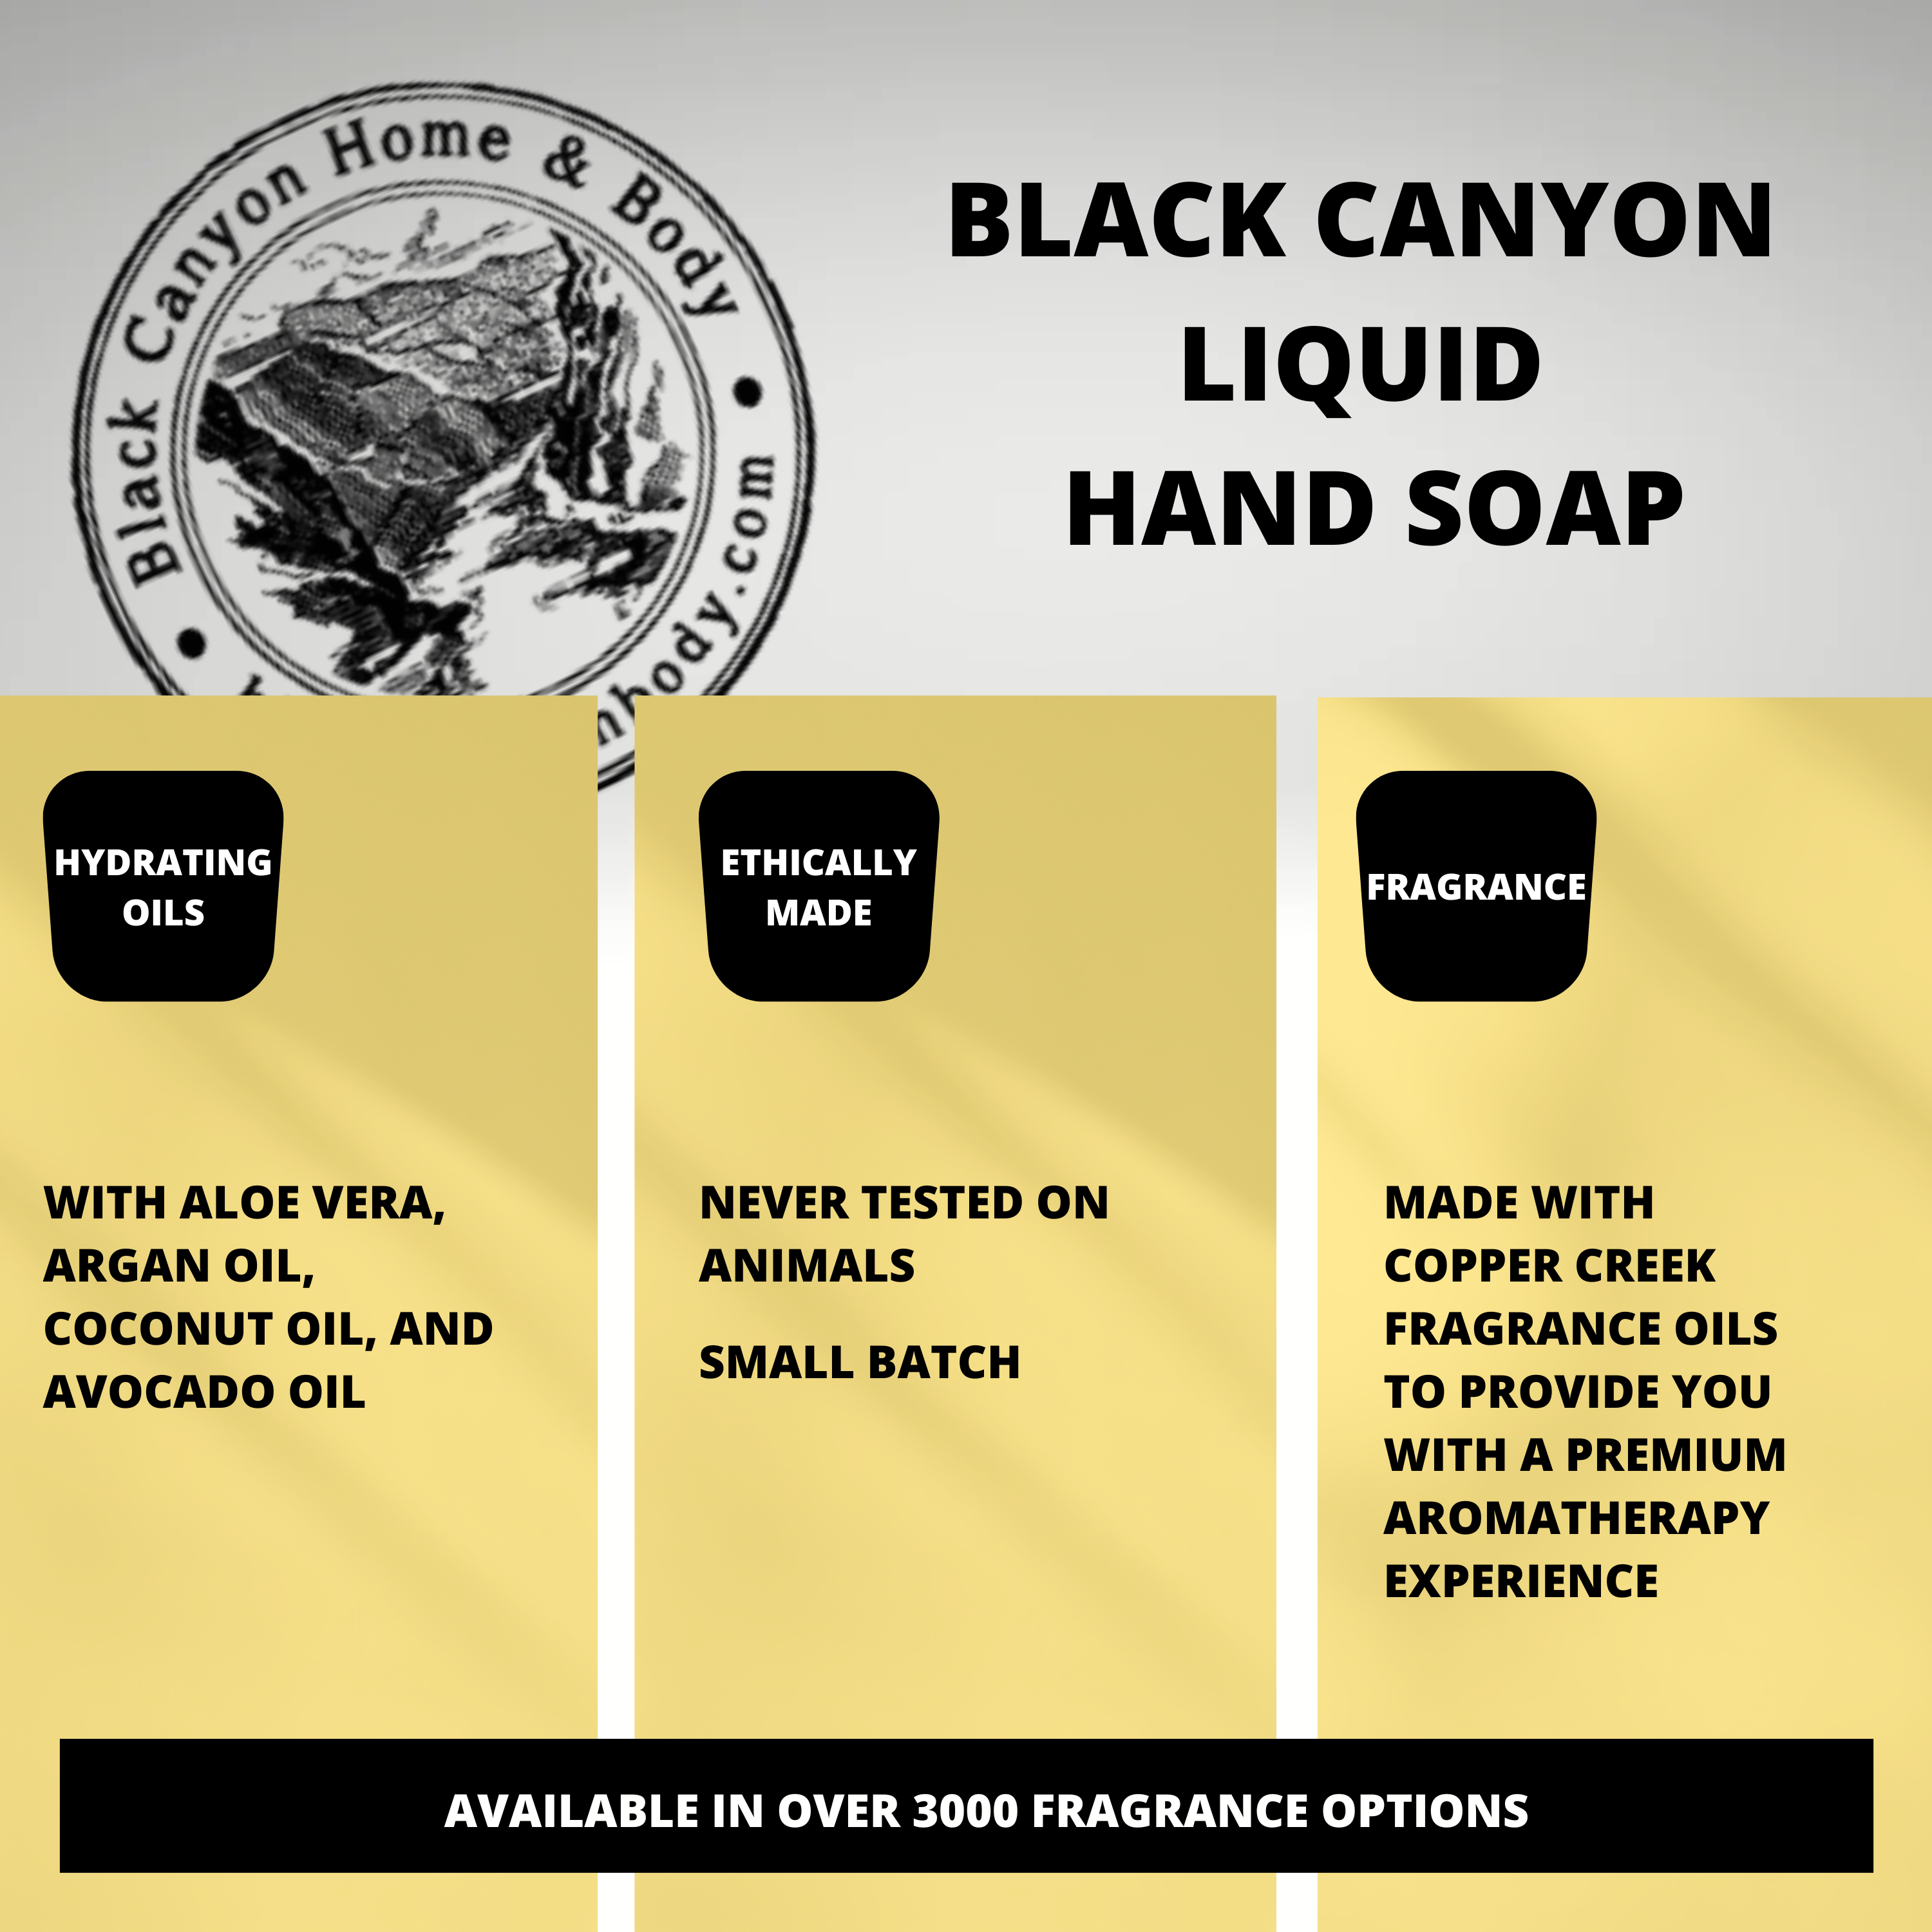 Black Canyon Cinnamon Clove Scented Liquid Hand Soap